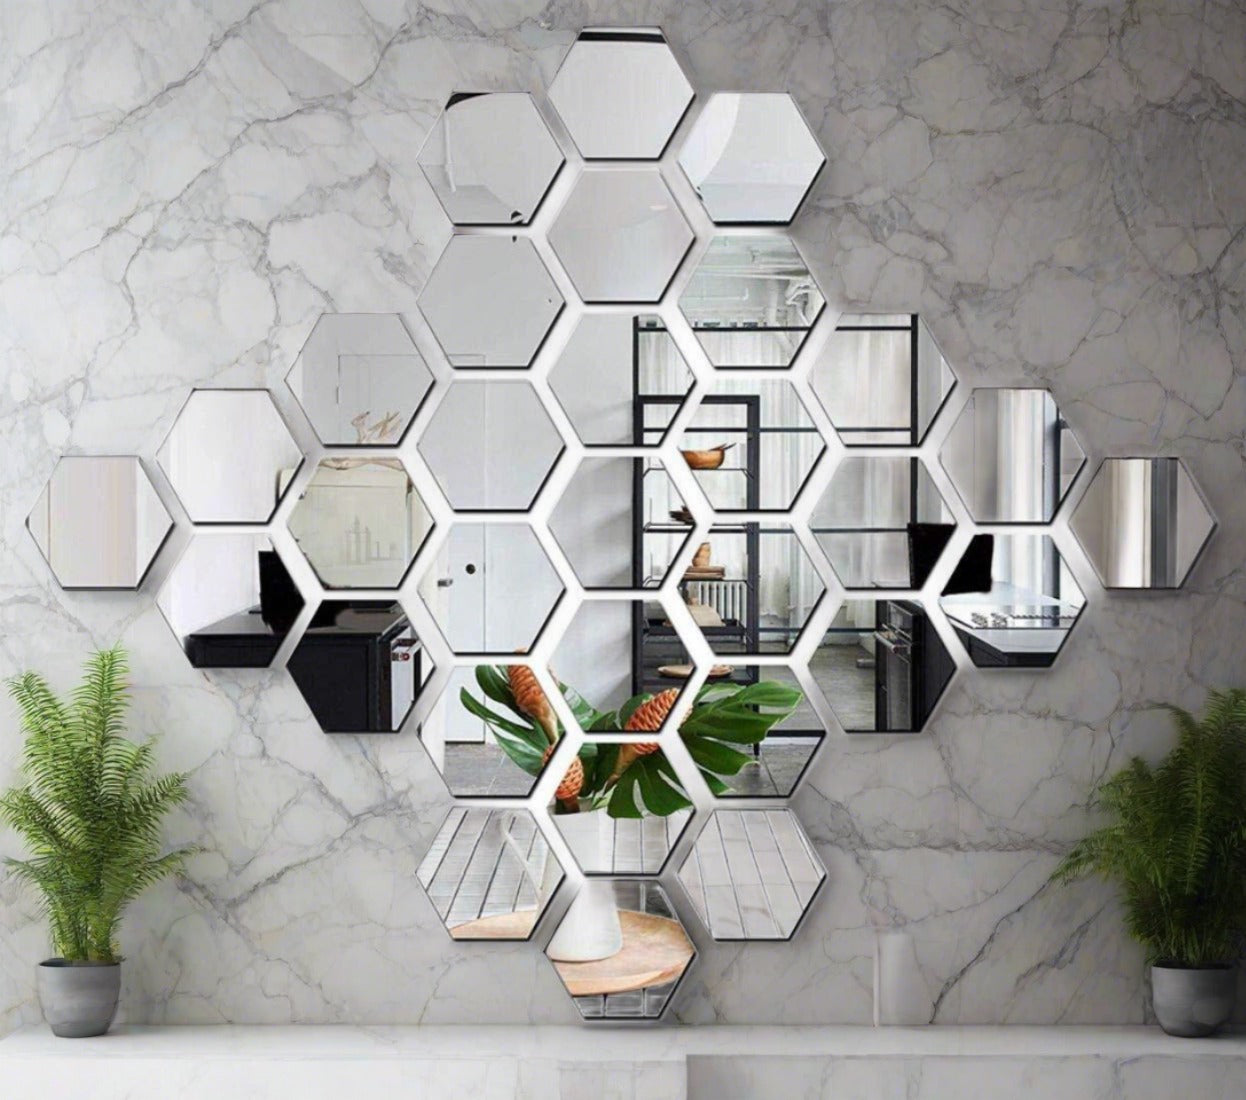 WAFUHS Mirror Stickers For Wall Pack Of 32 Hexagon Silver Color Flexible Mirror Size (10x12)Cm Each Hexagon